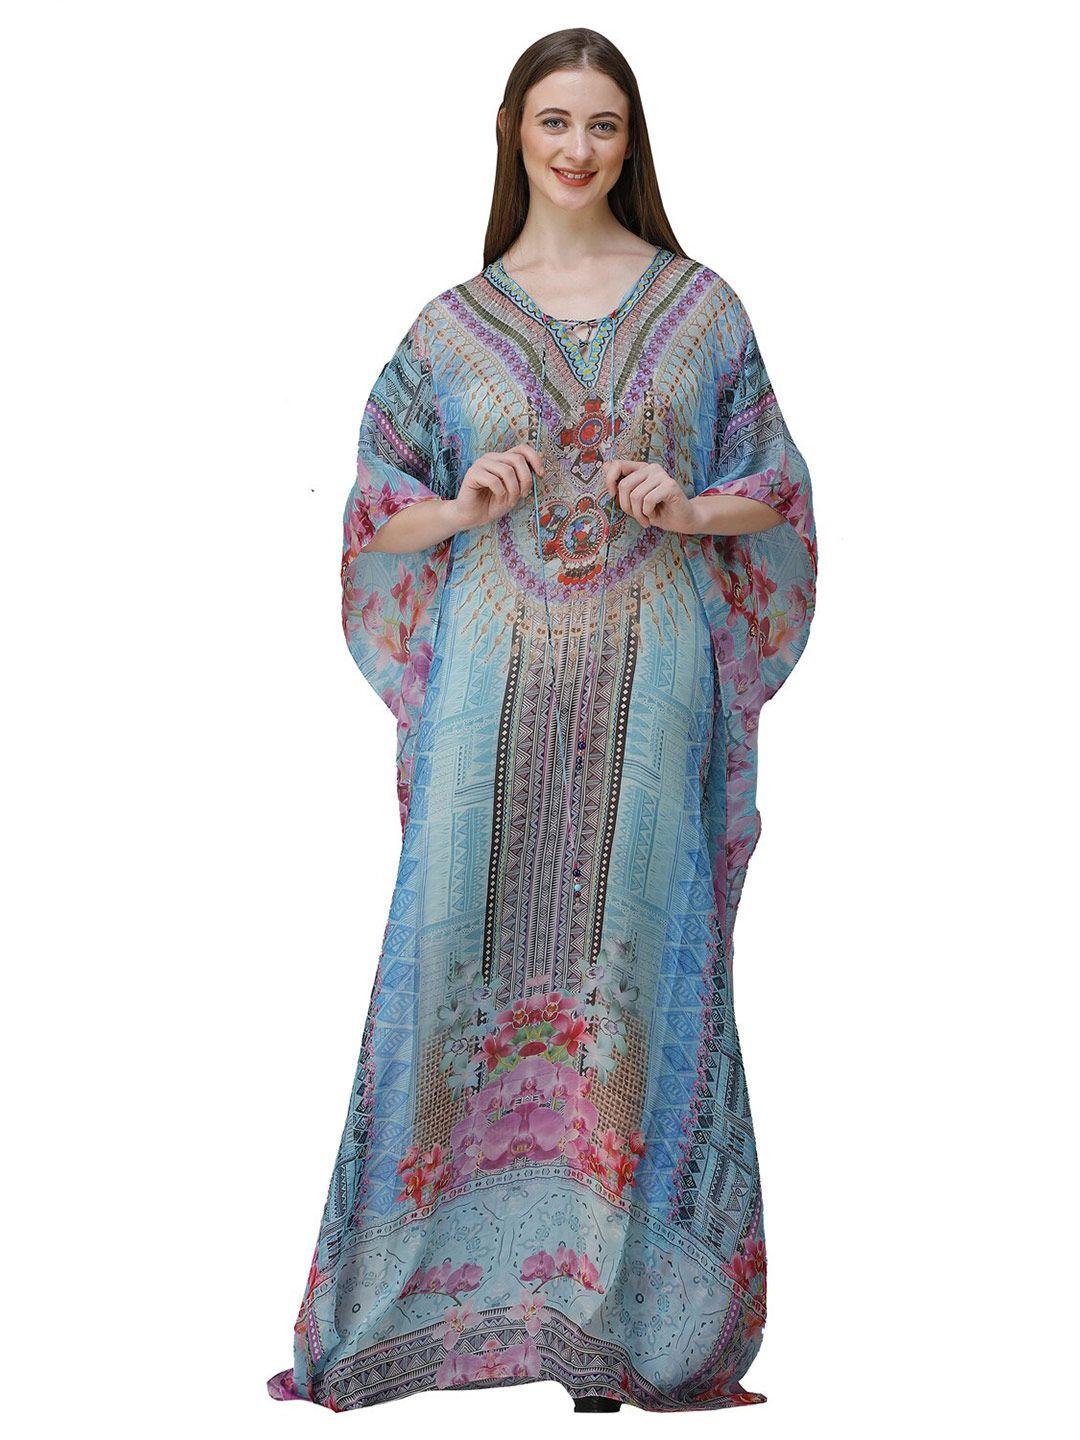 rajoria instyle women blue & red floral tie-up neck georgette ethnic kaftan maxi dress